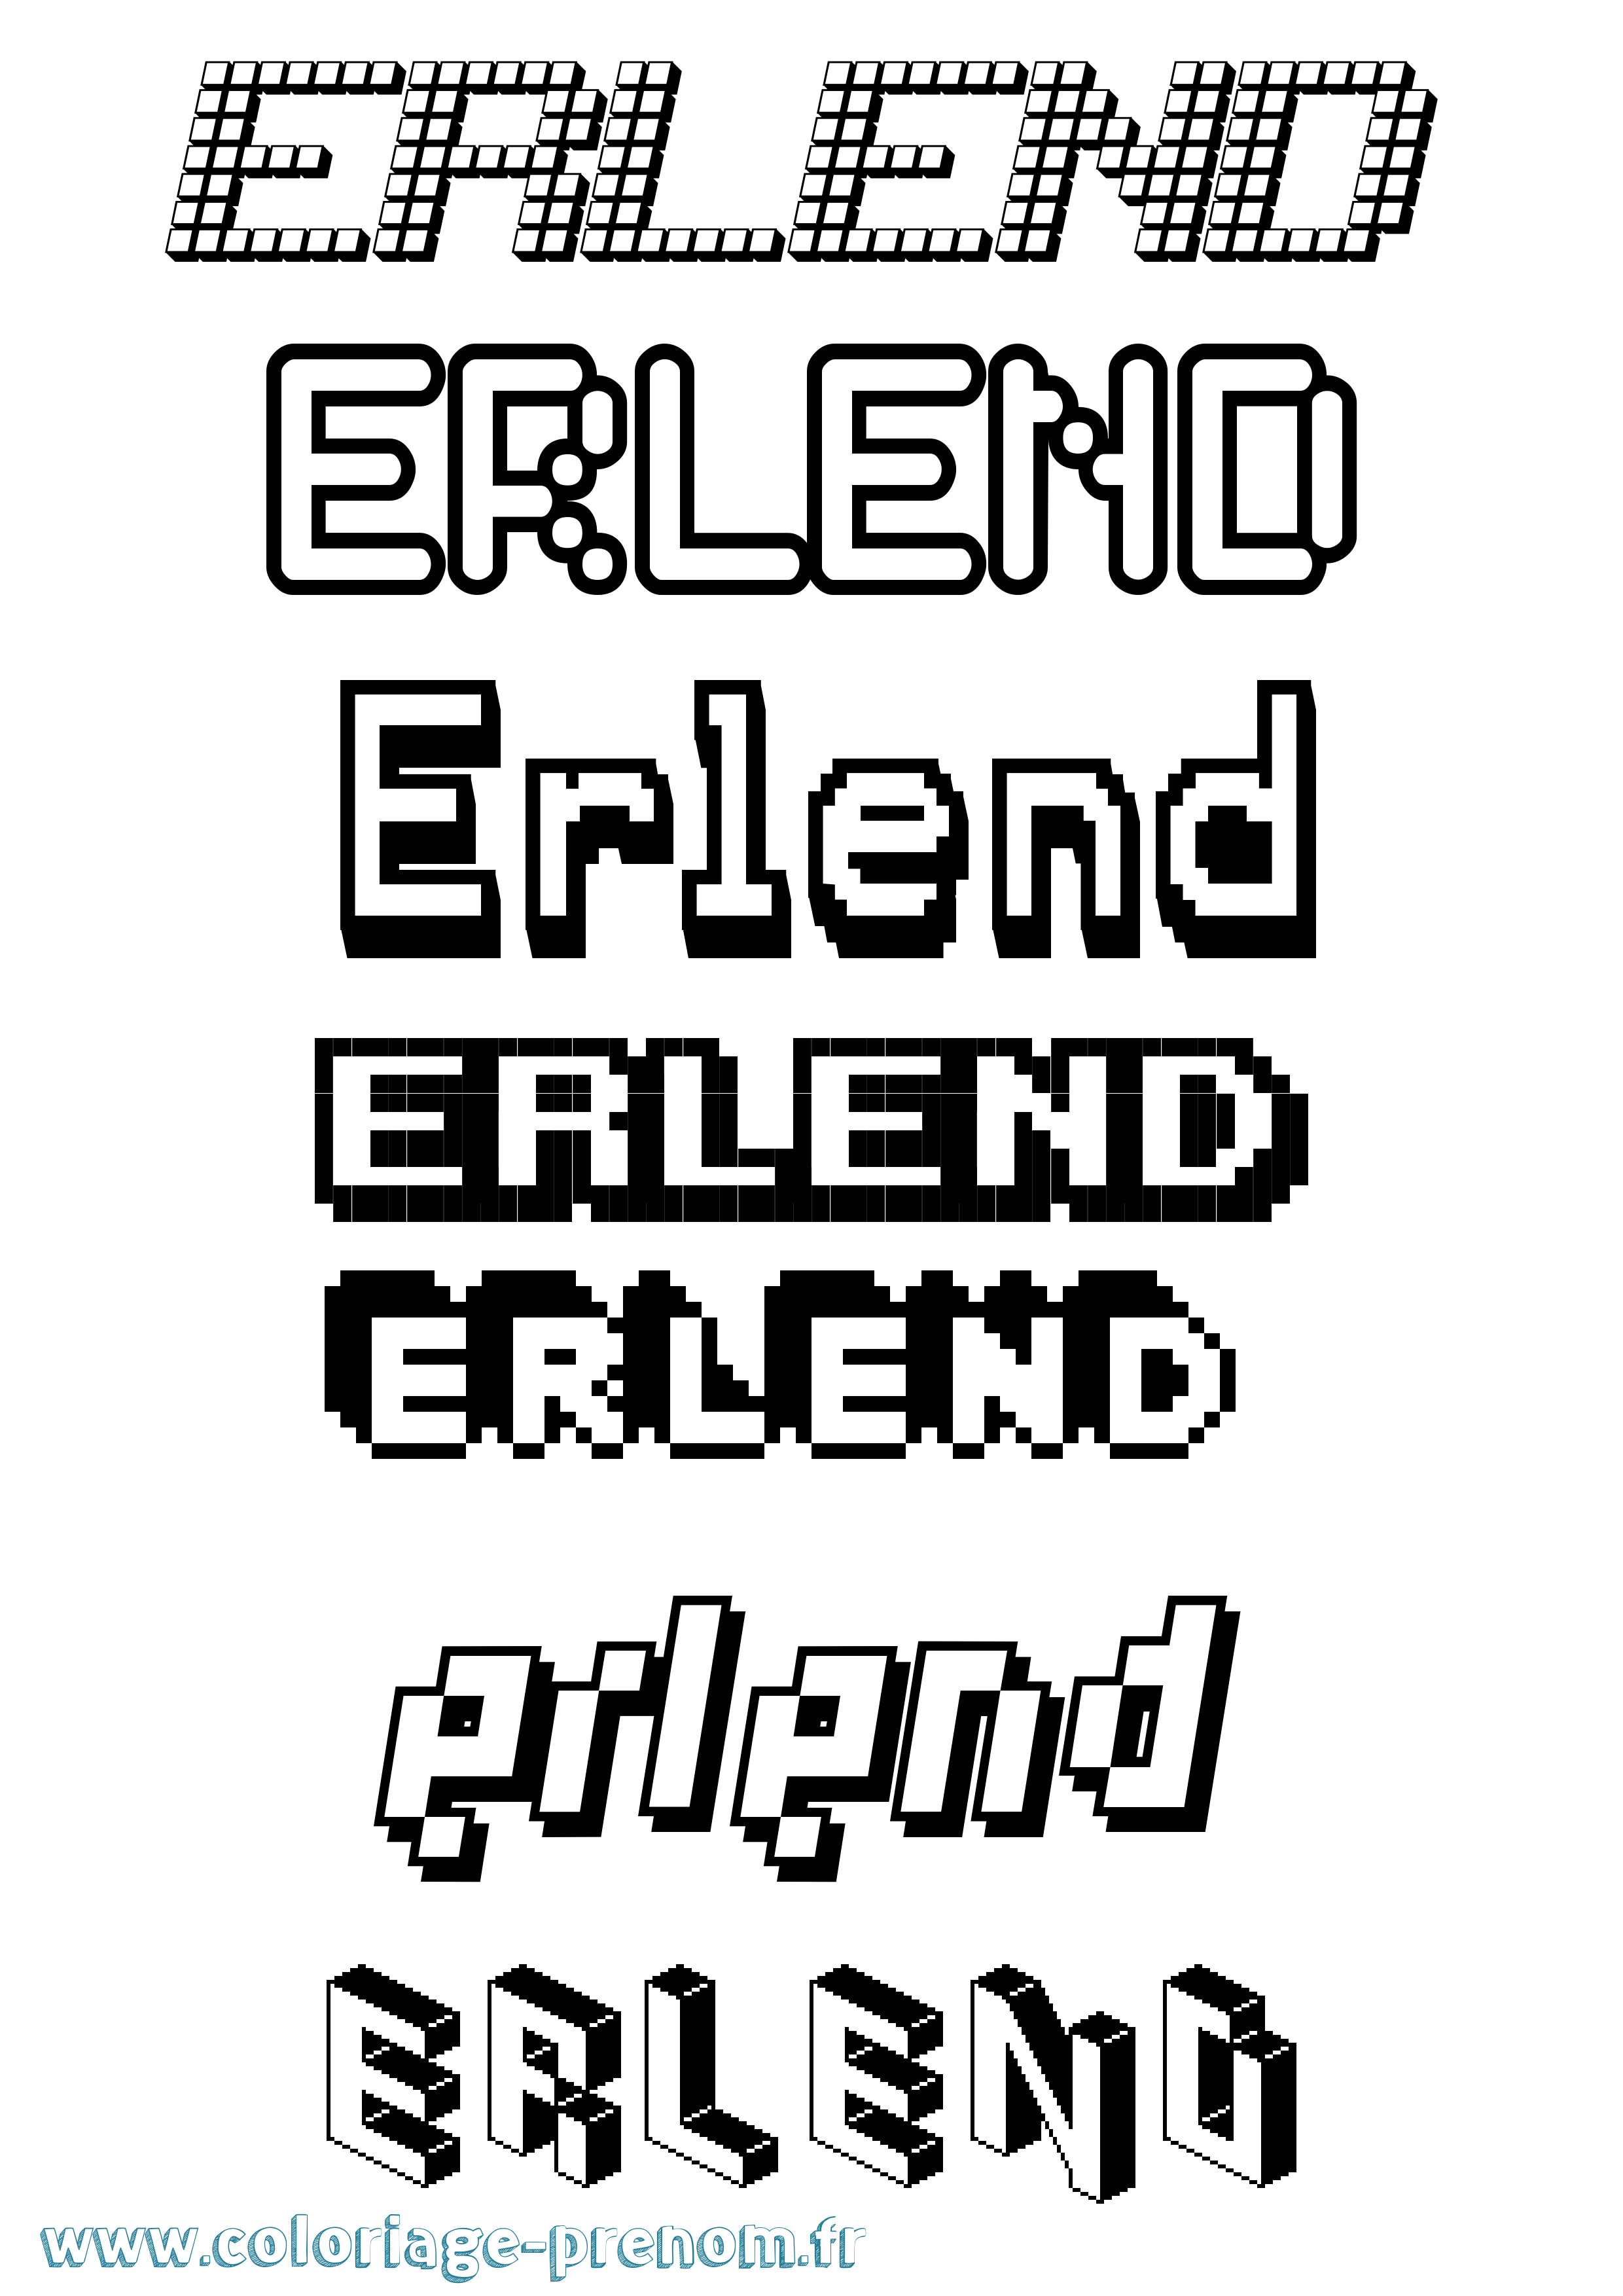 Coloriage prénom Erlend Pixel